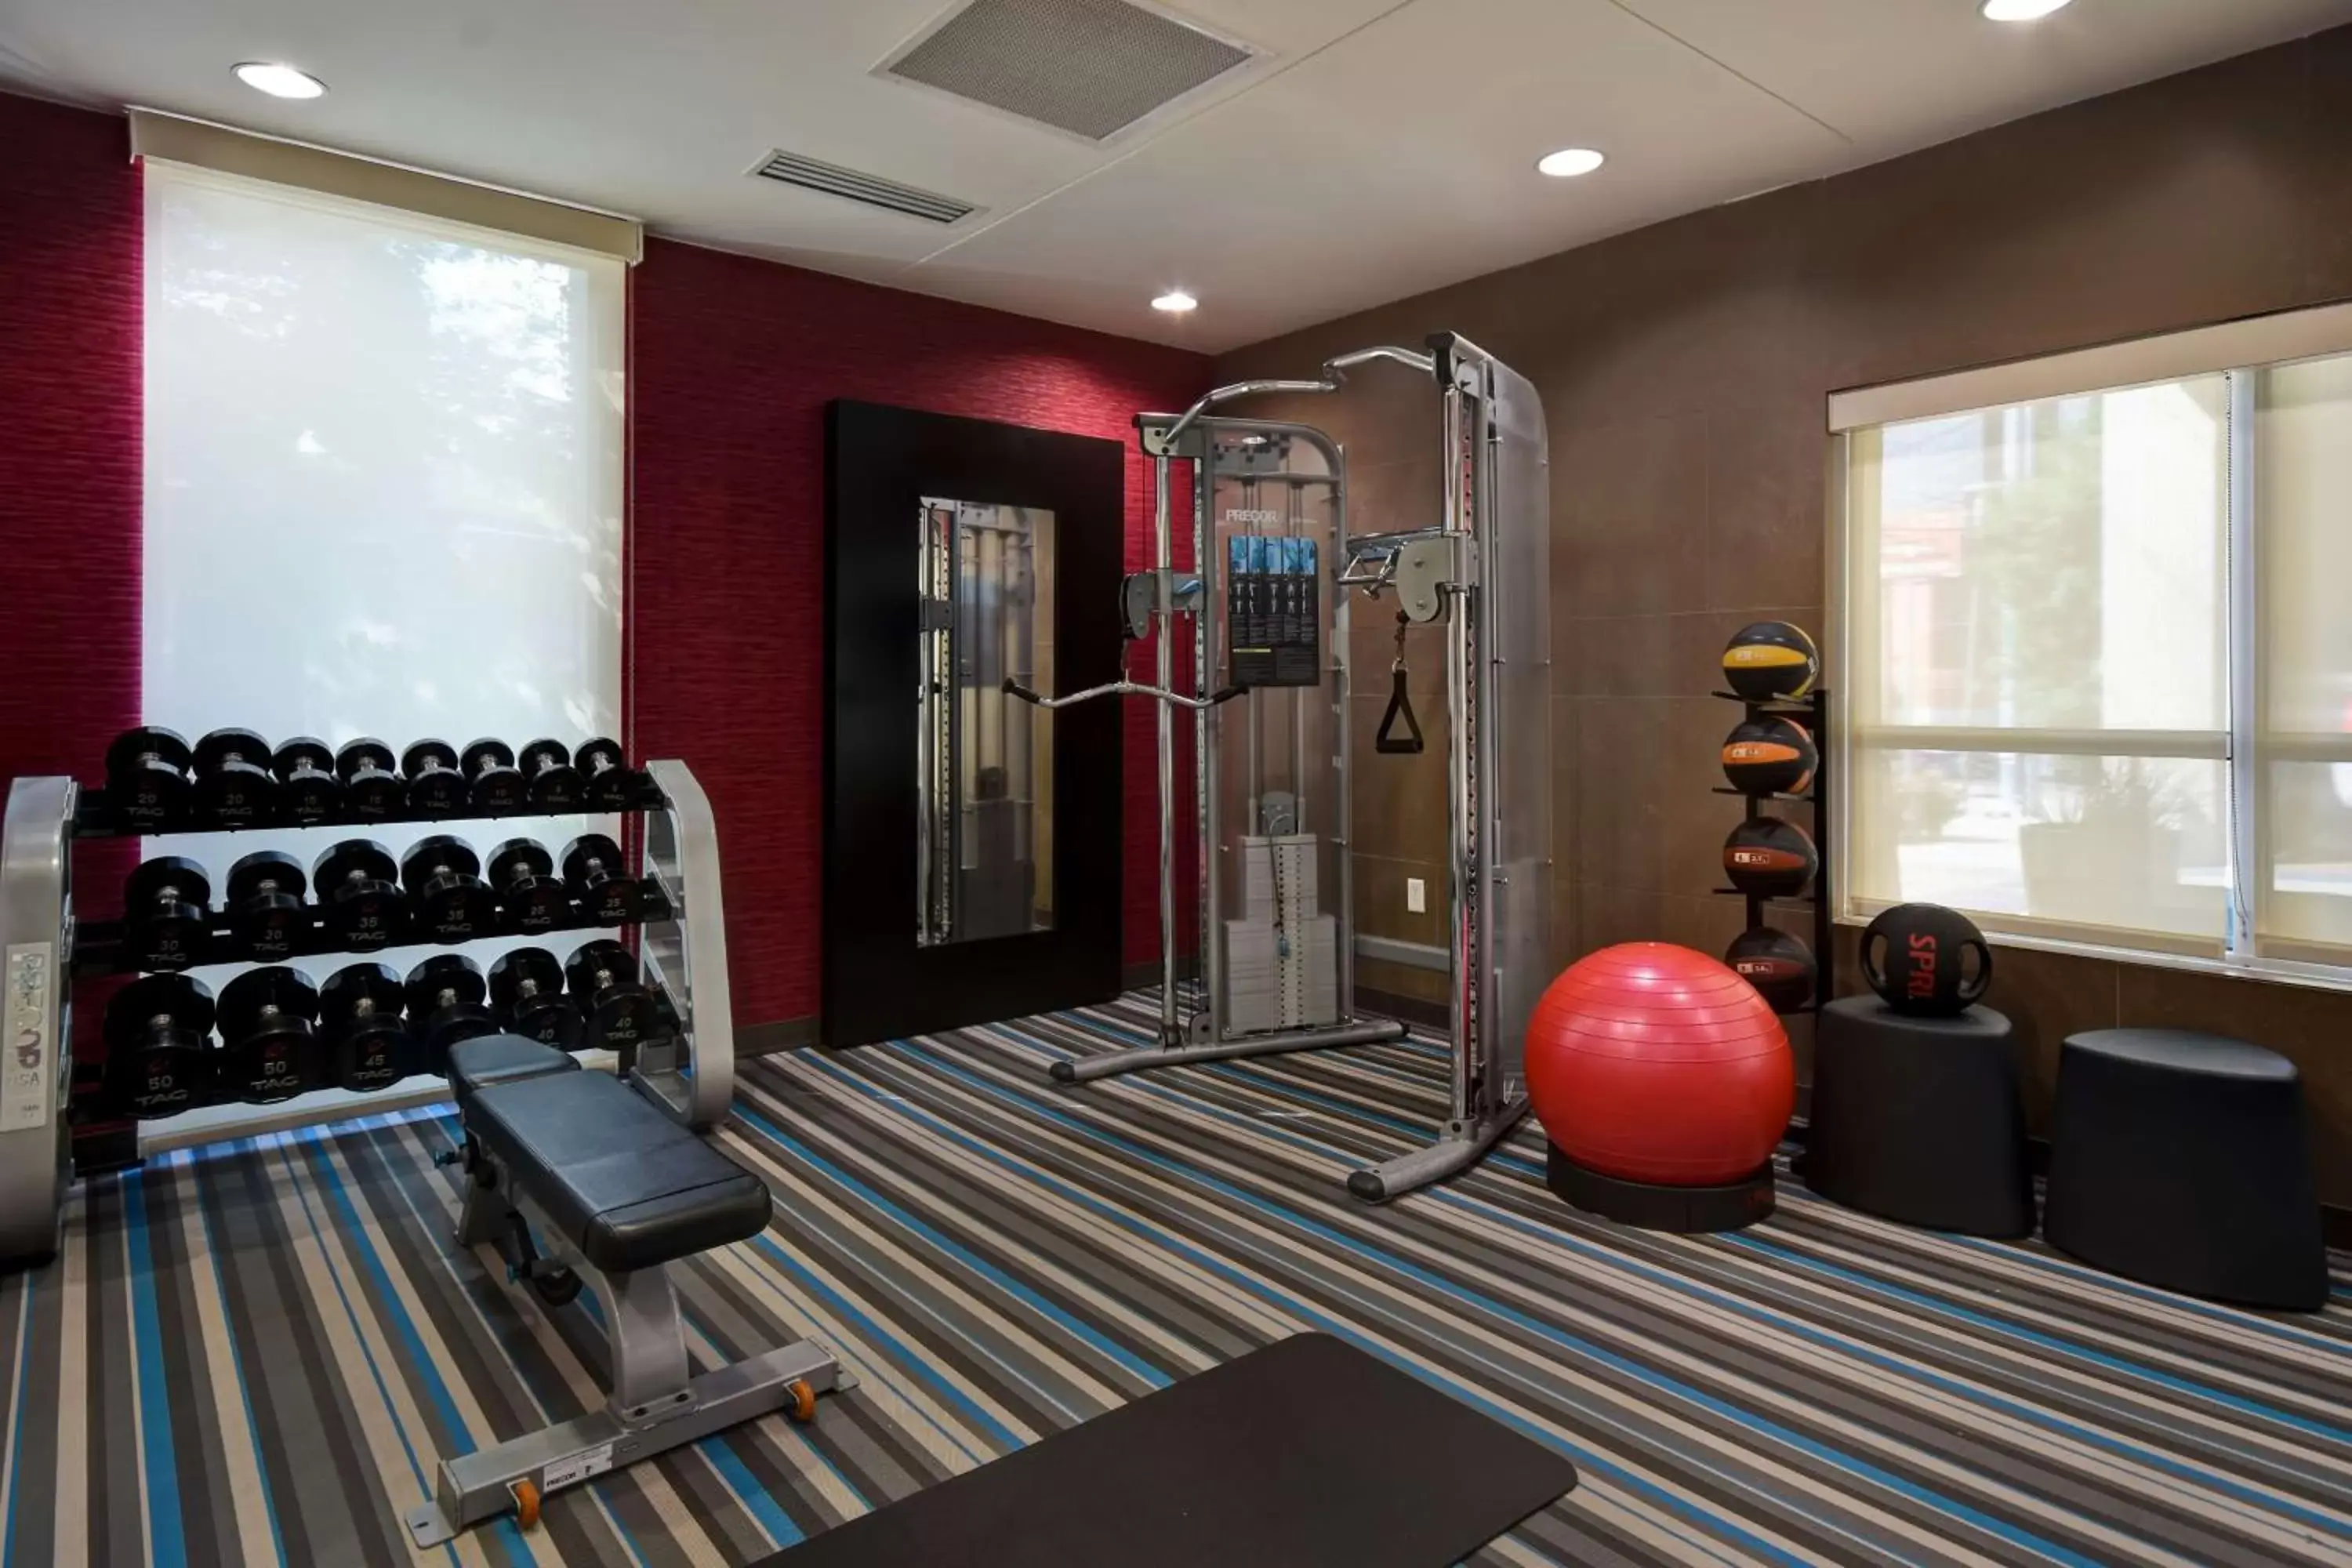 Fitness centre/facilities, Fitness Center/Facilities in Home2 Suites by Hilton Nashville Vanderbilt, TN